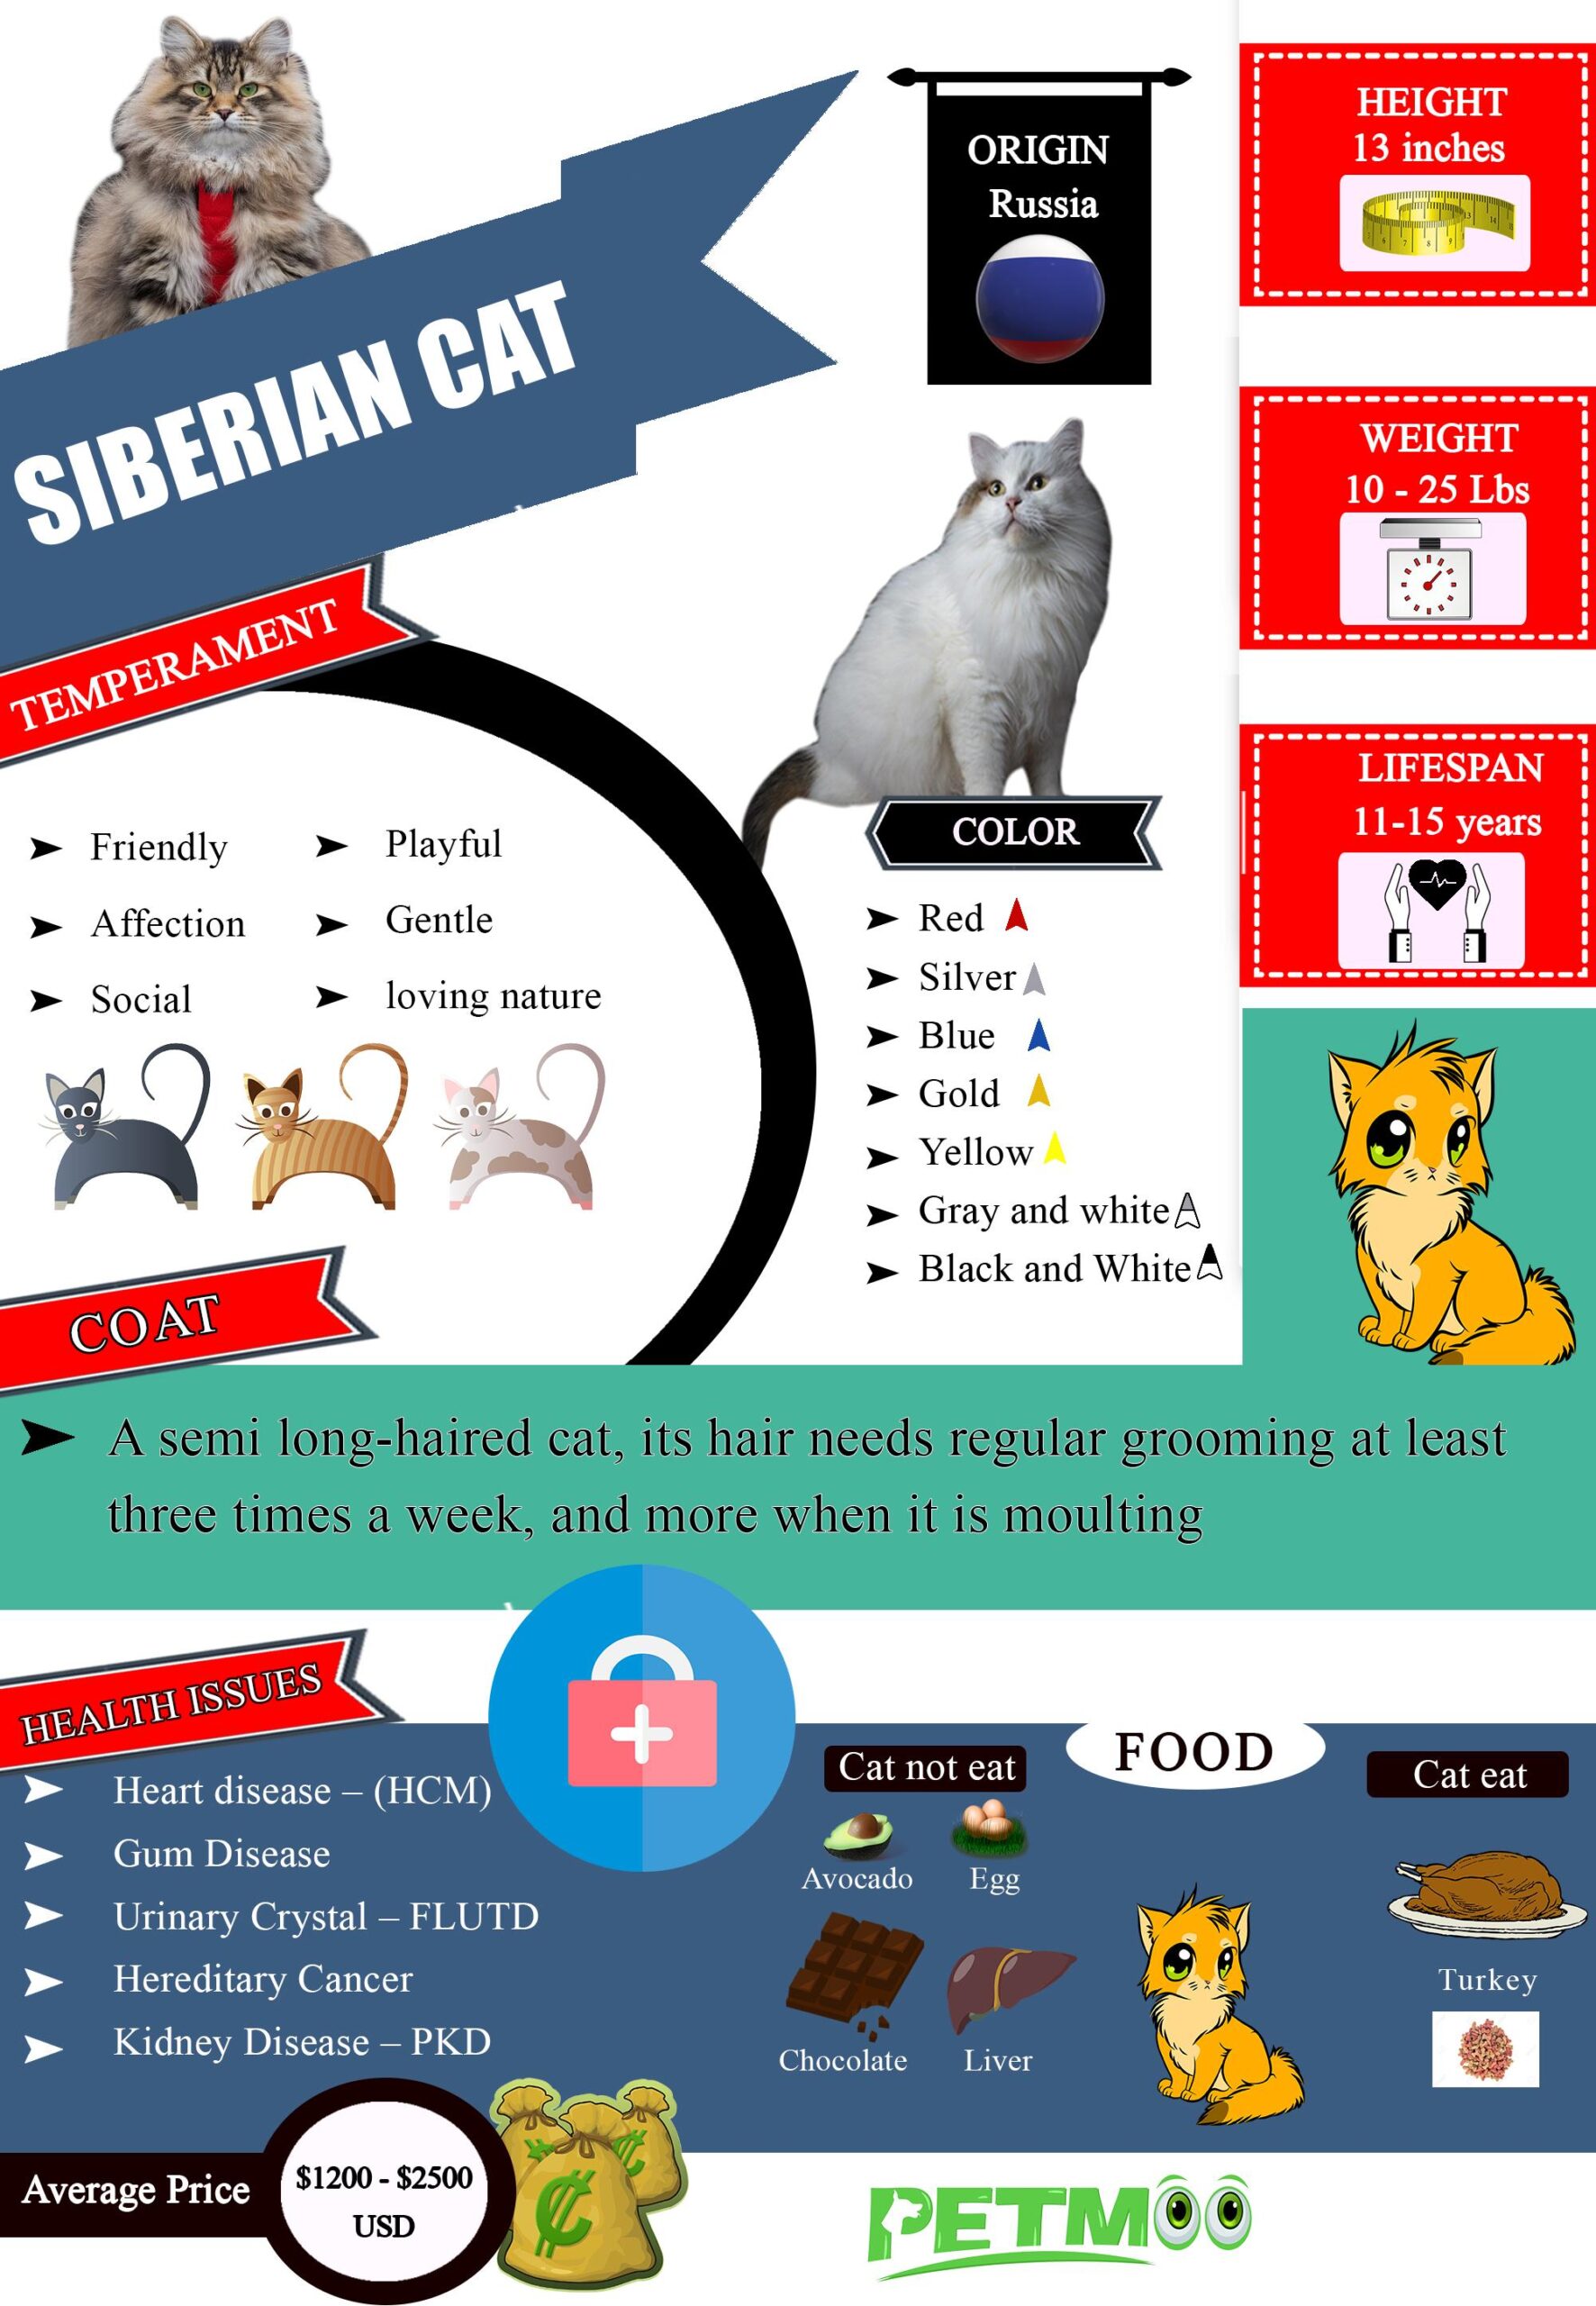 Siberian Cat Infographic